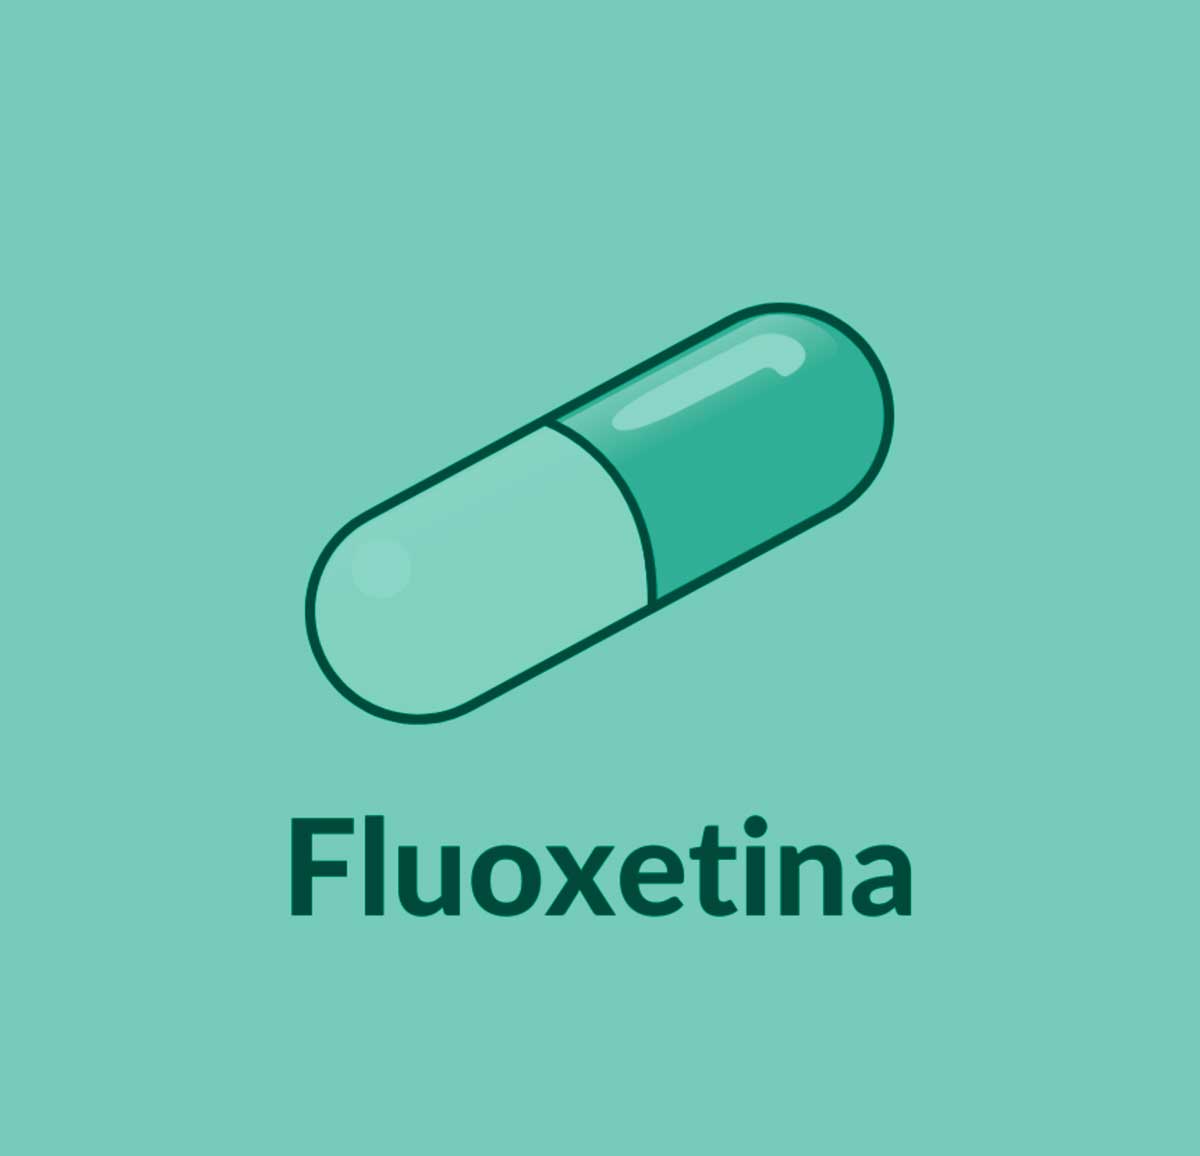 Fluoxetin cbd